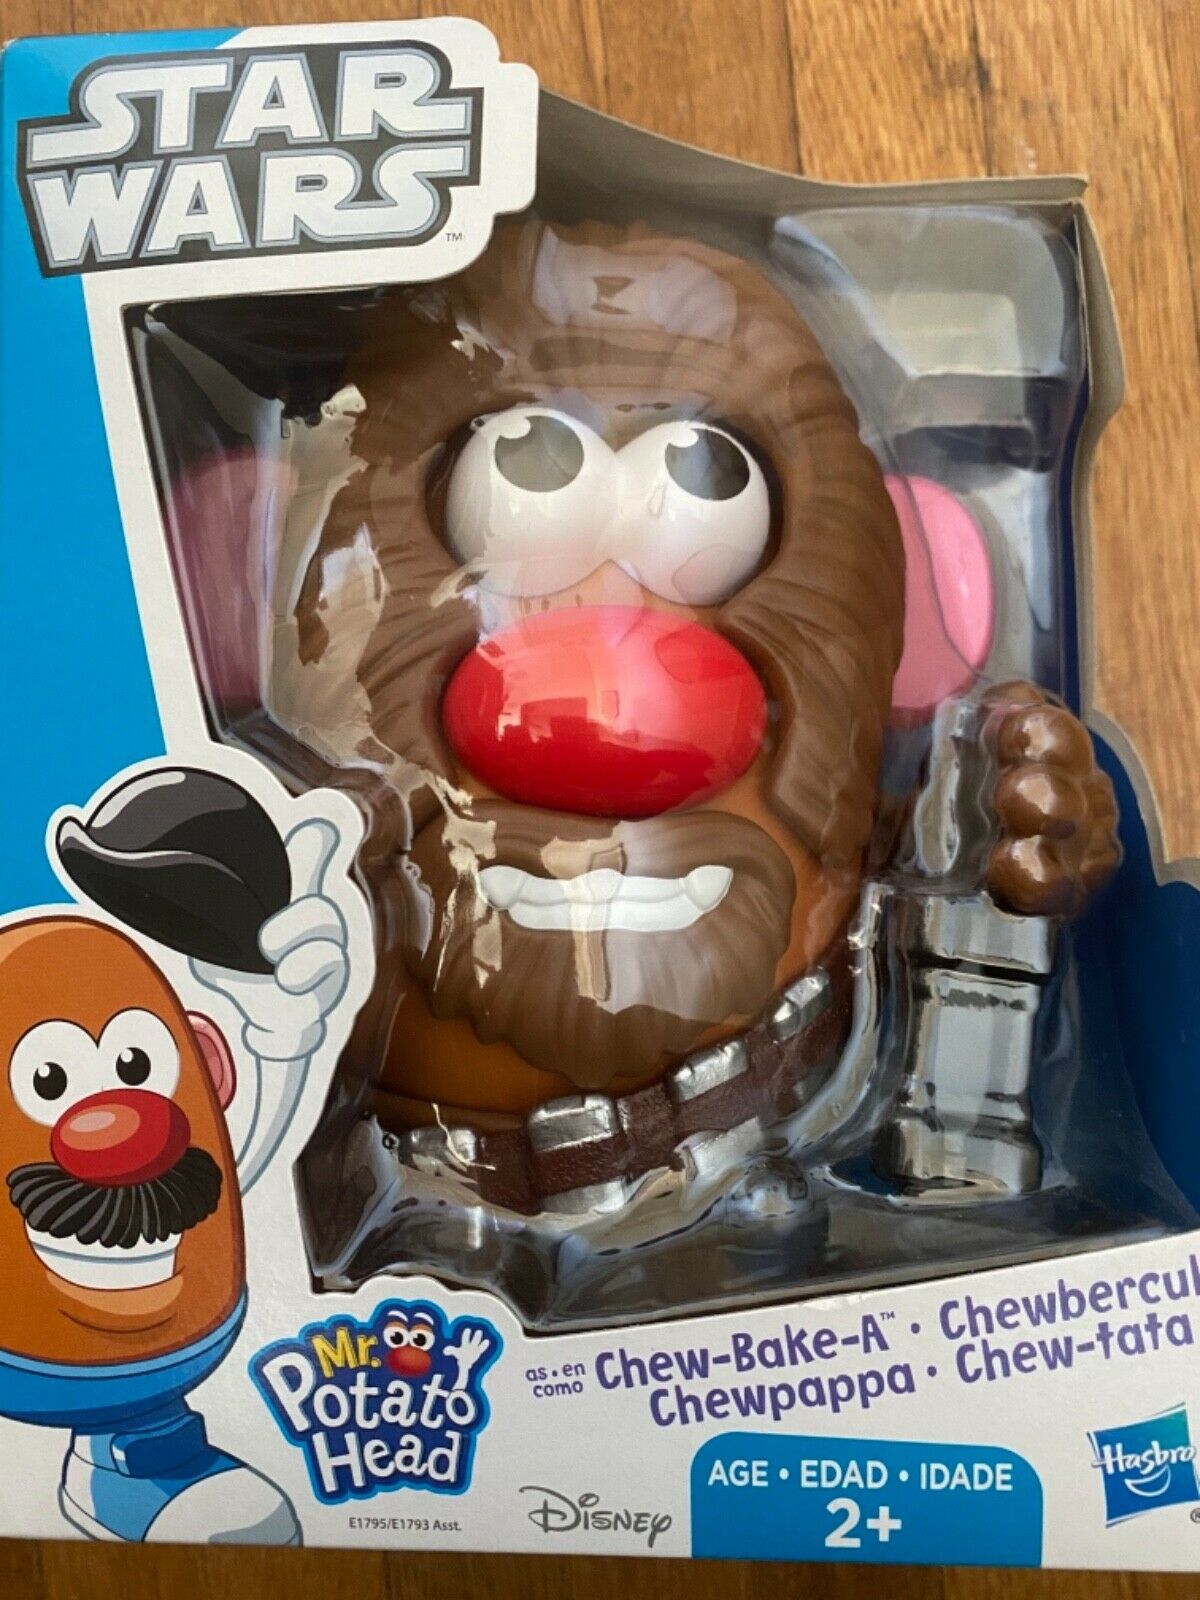 NEW Star Wars Mr Potato Head Chew-bake-a disney